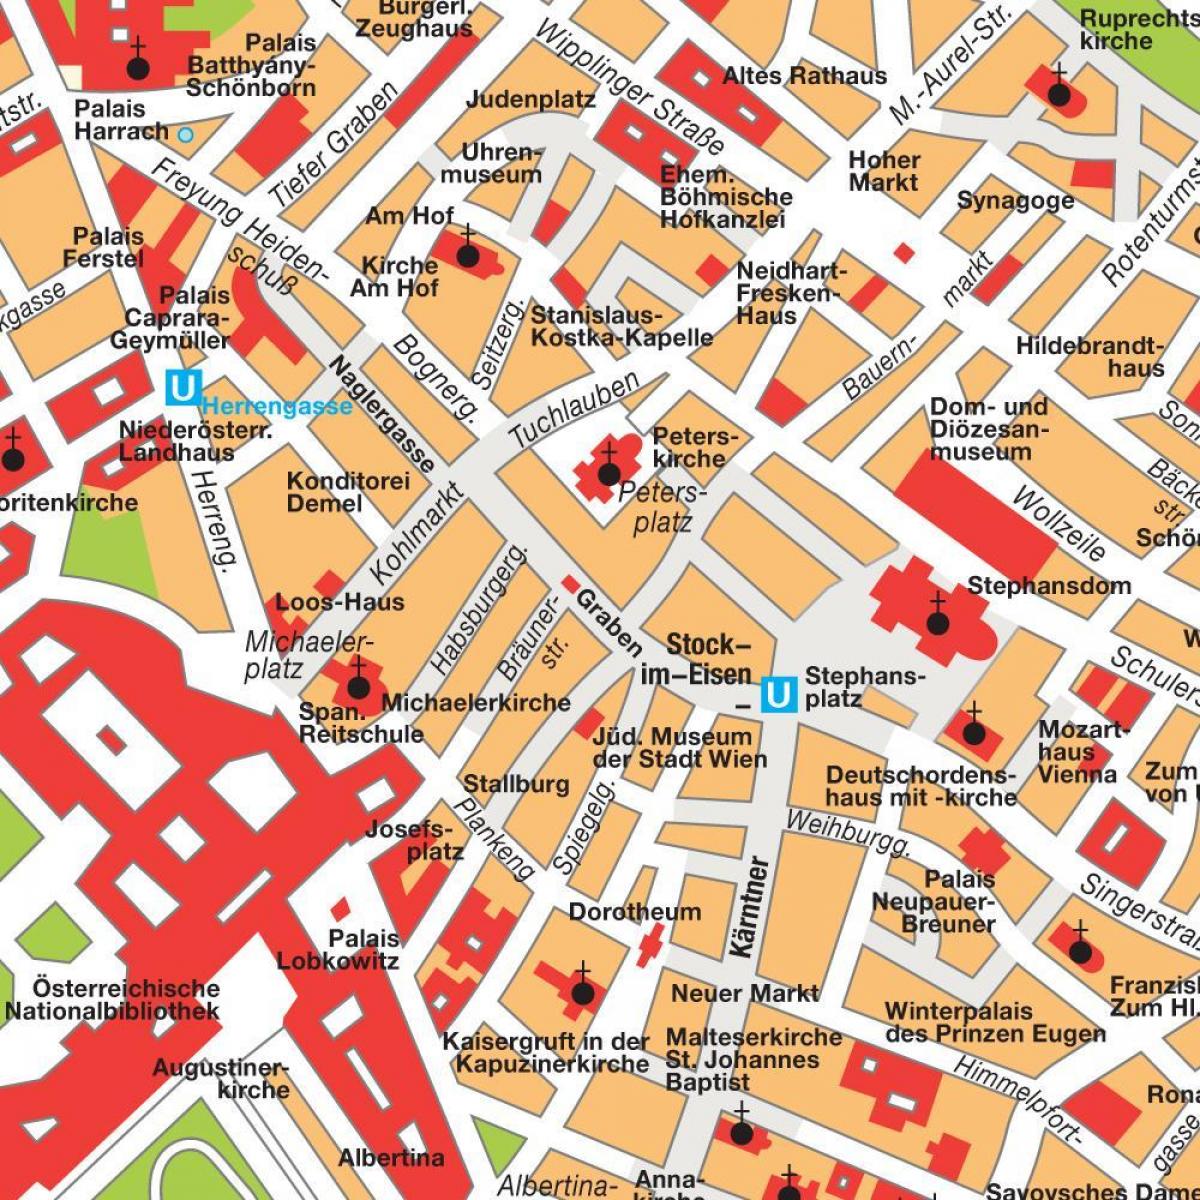 Wiedeń centrum mapie